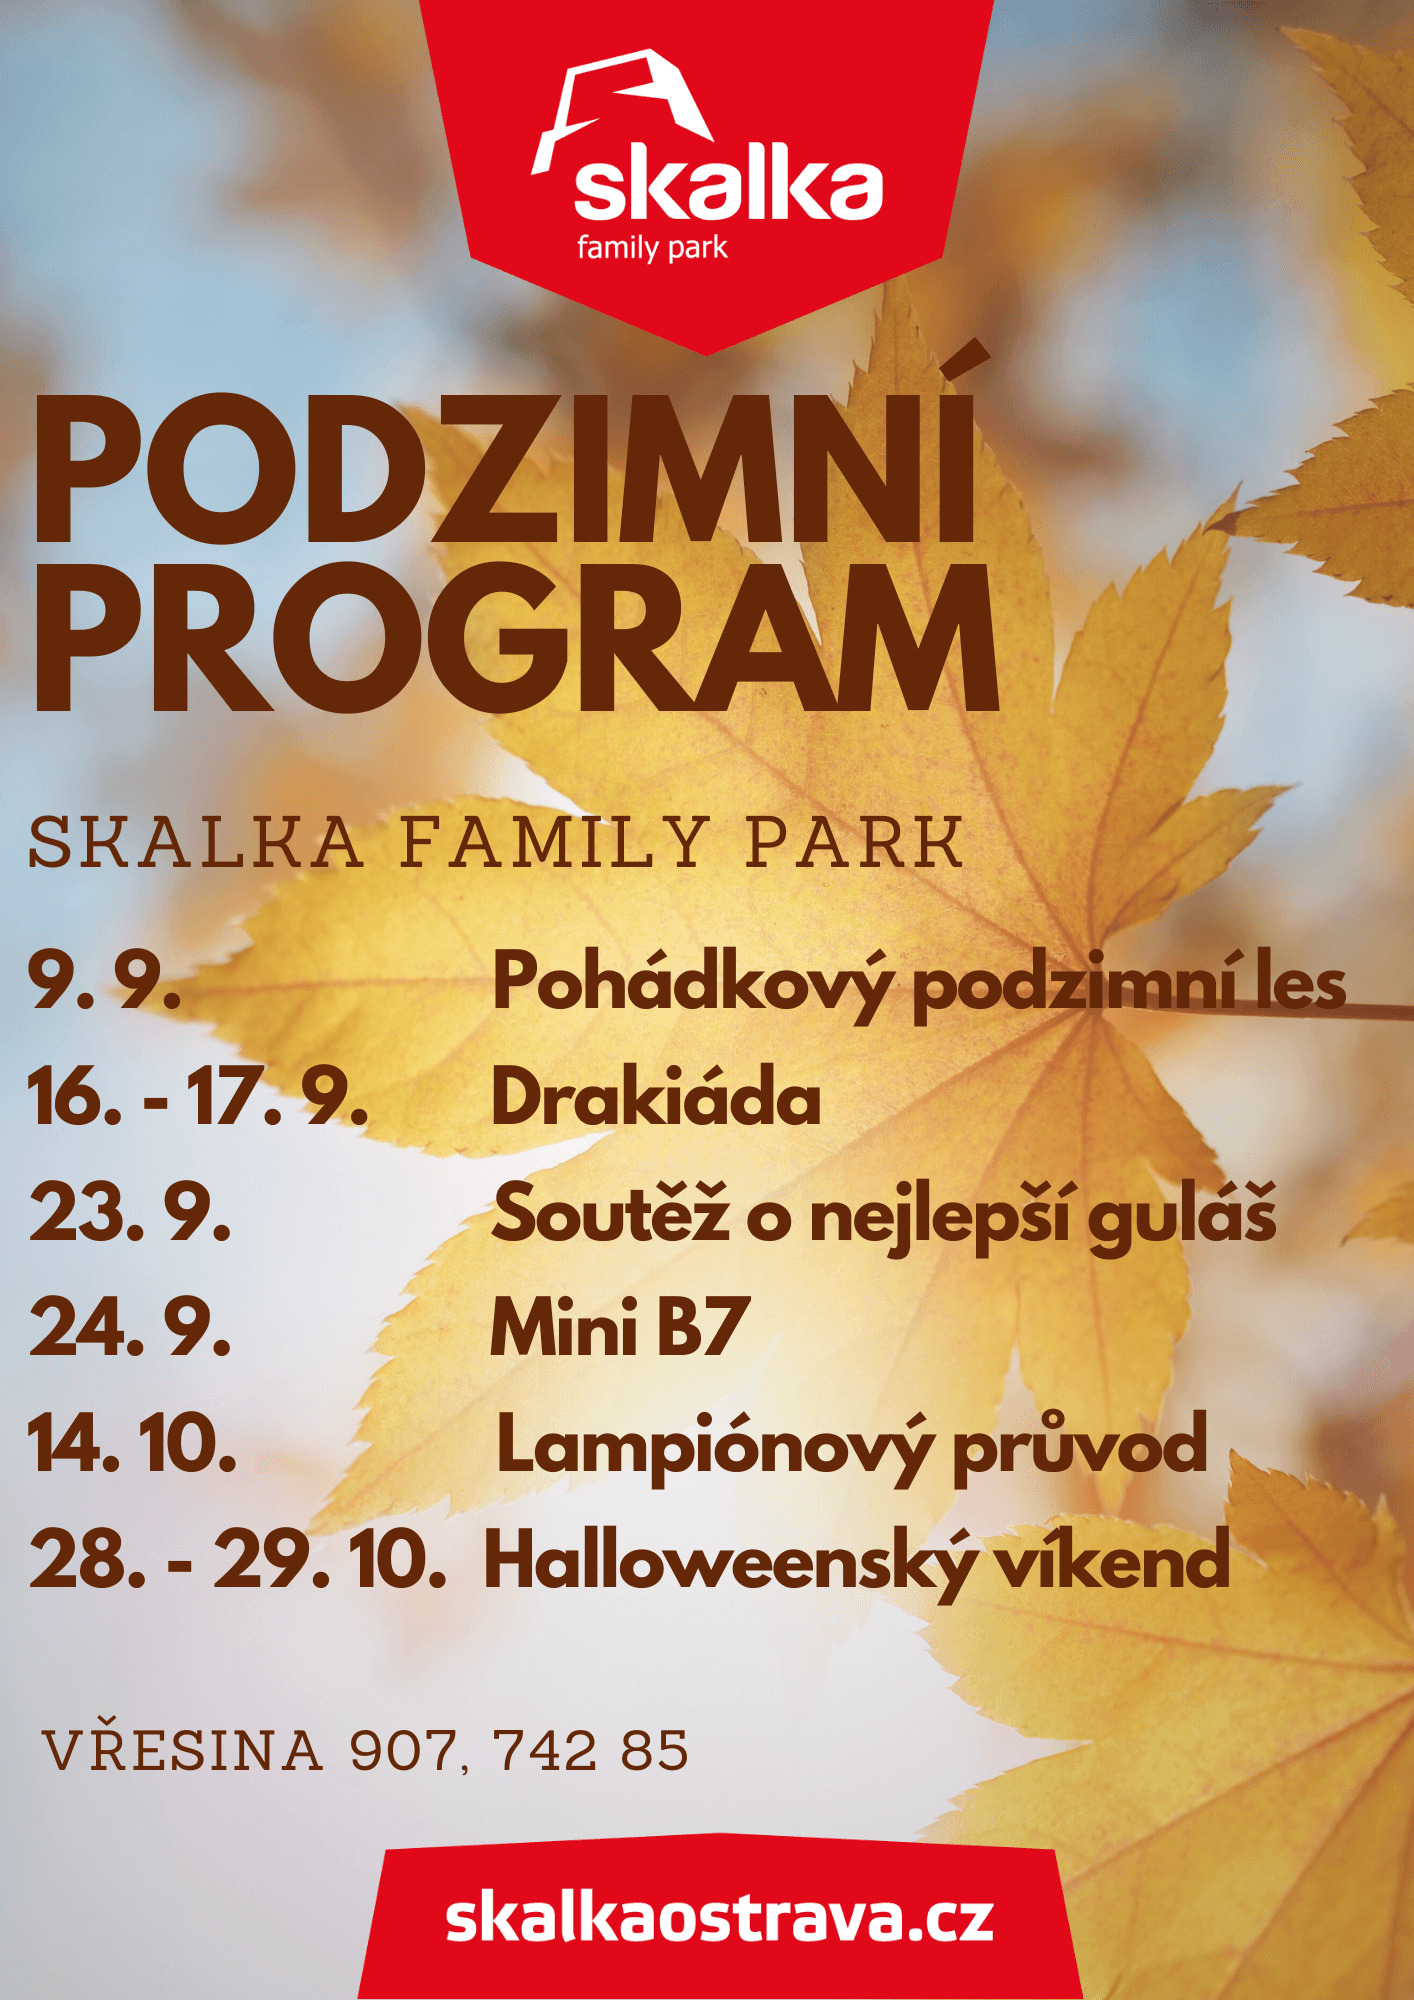 skalka family park: podzimnÍ program